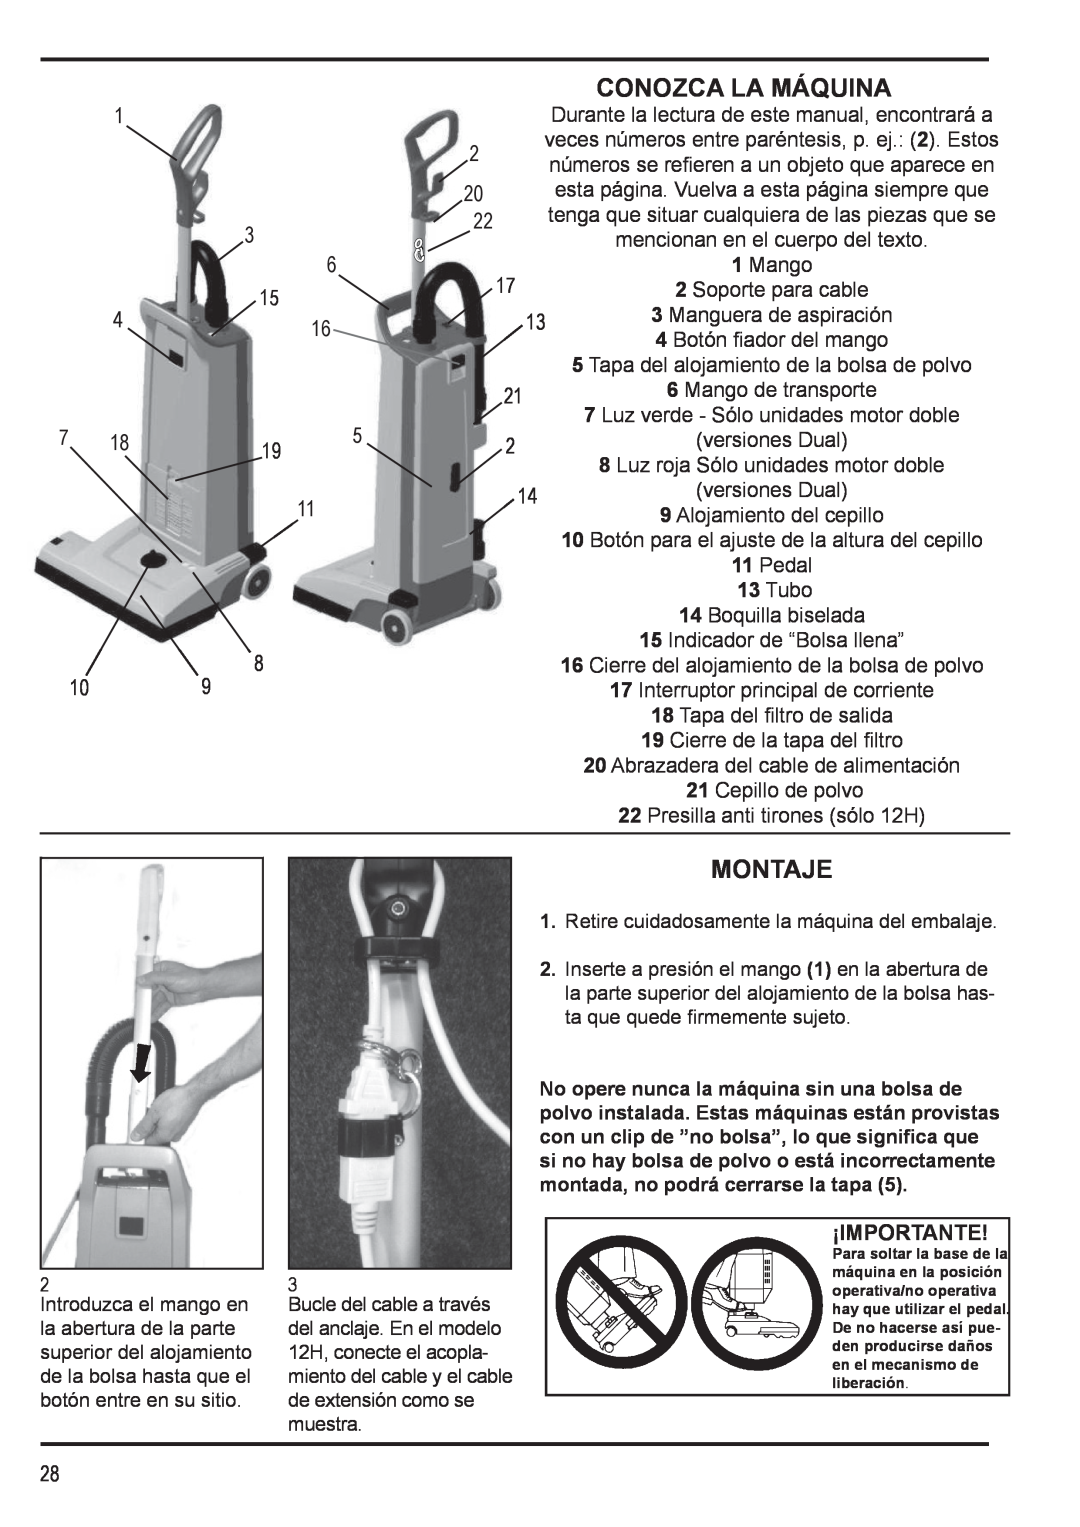 Nilfisk-Advance America 12H manual Conozca La Máquina, Montaje, ¡Importante 